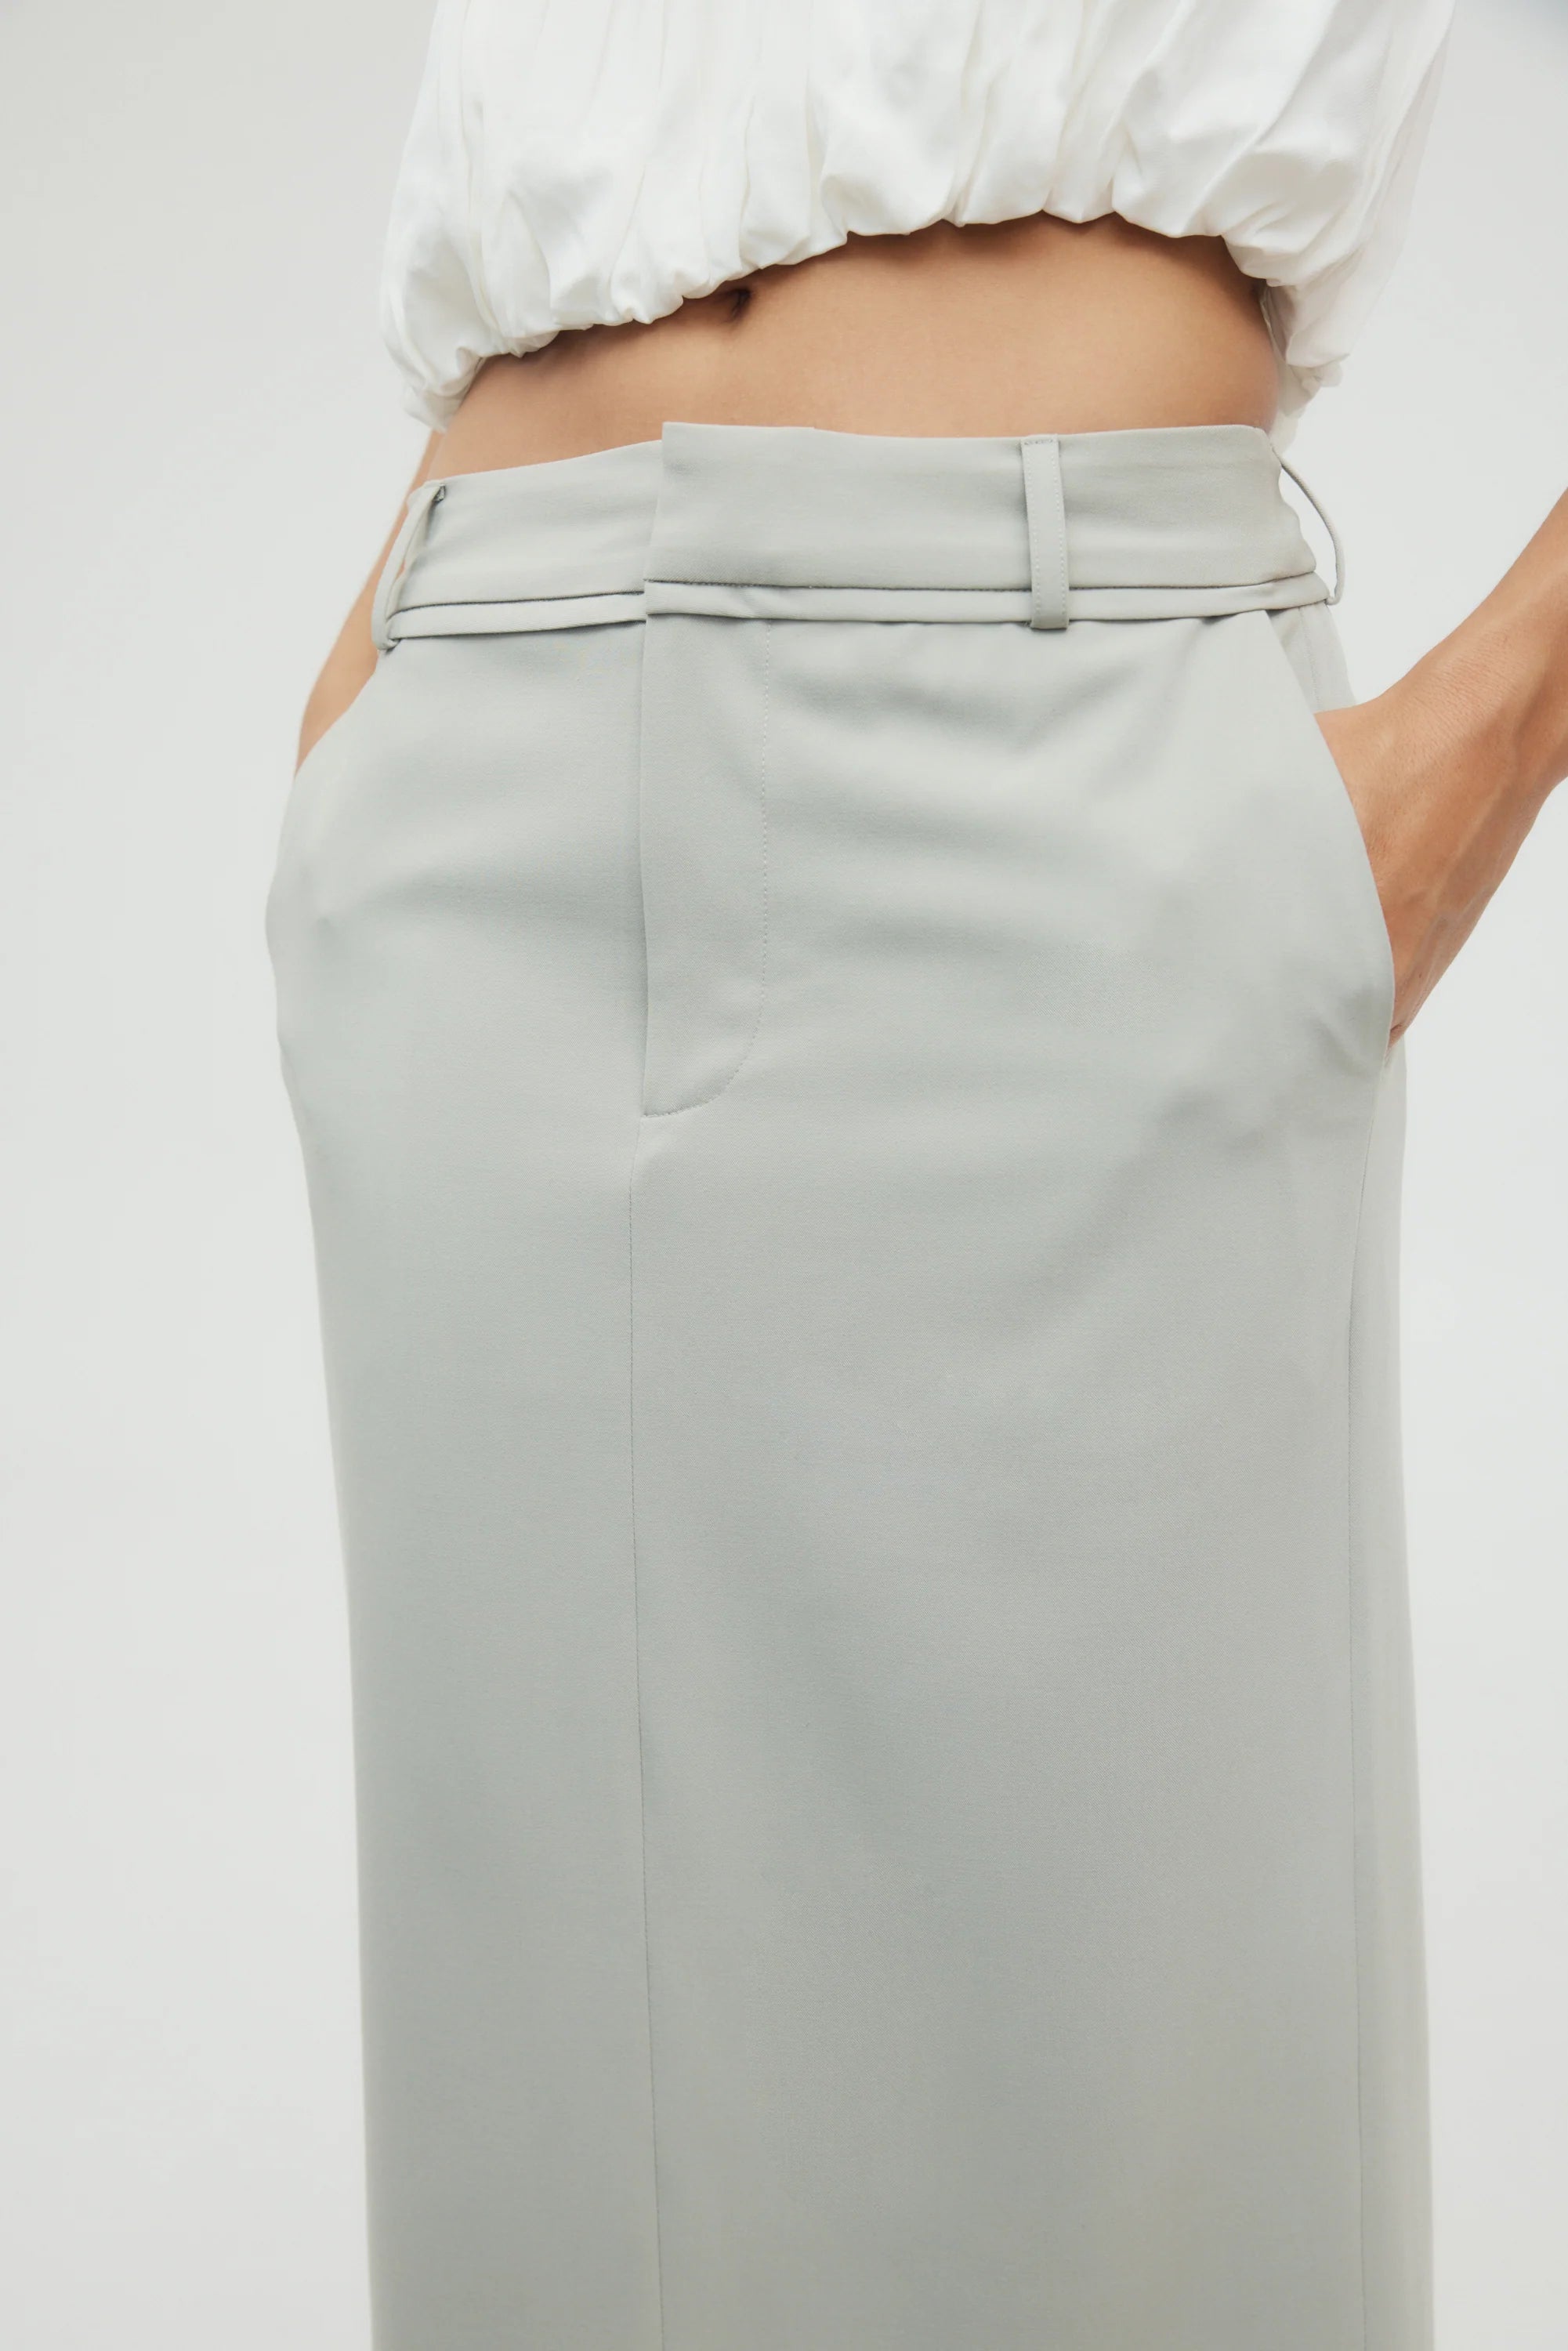 Protocol Tailored Maxi Skirt